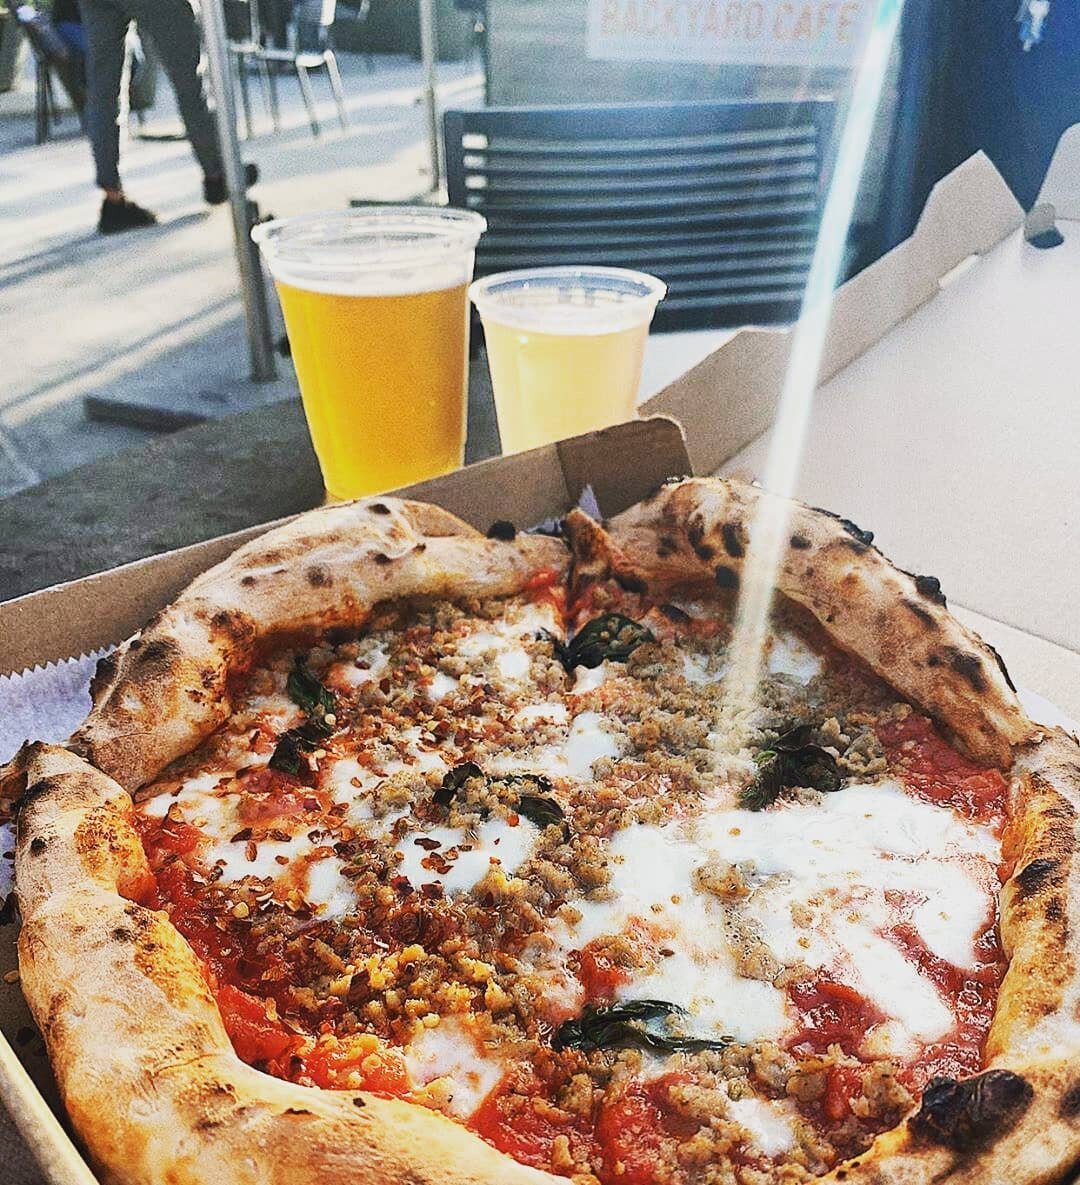 Weekend Vibes @thevesselnyc 🌞
🍕 + 🎥 at the Backyard
📸 @arianna.ravelo 
.
.
.
.
.
#wegetaround #pizza #pizzatruck @hudsonyards @tribeca  #AllInNYC #mobilefood @zevvfoods #cleanenergy #neapolitanstylepizza #newlocation #hudsonyards #thevessel #2020